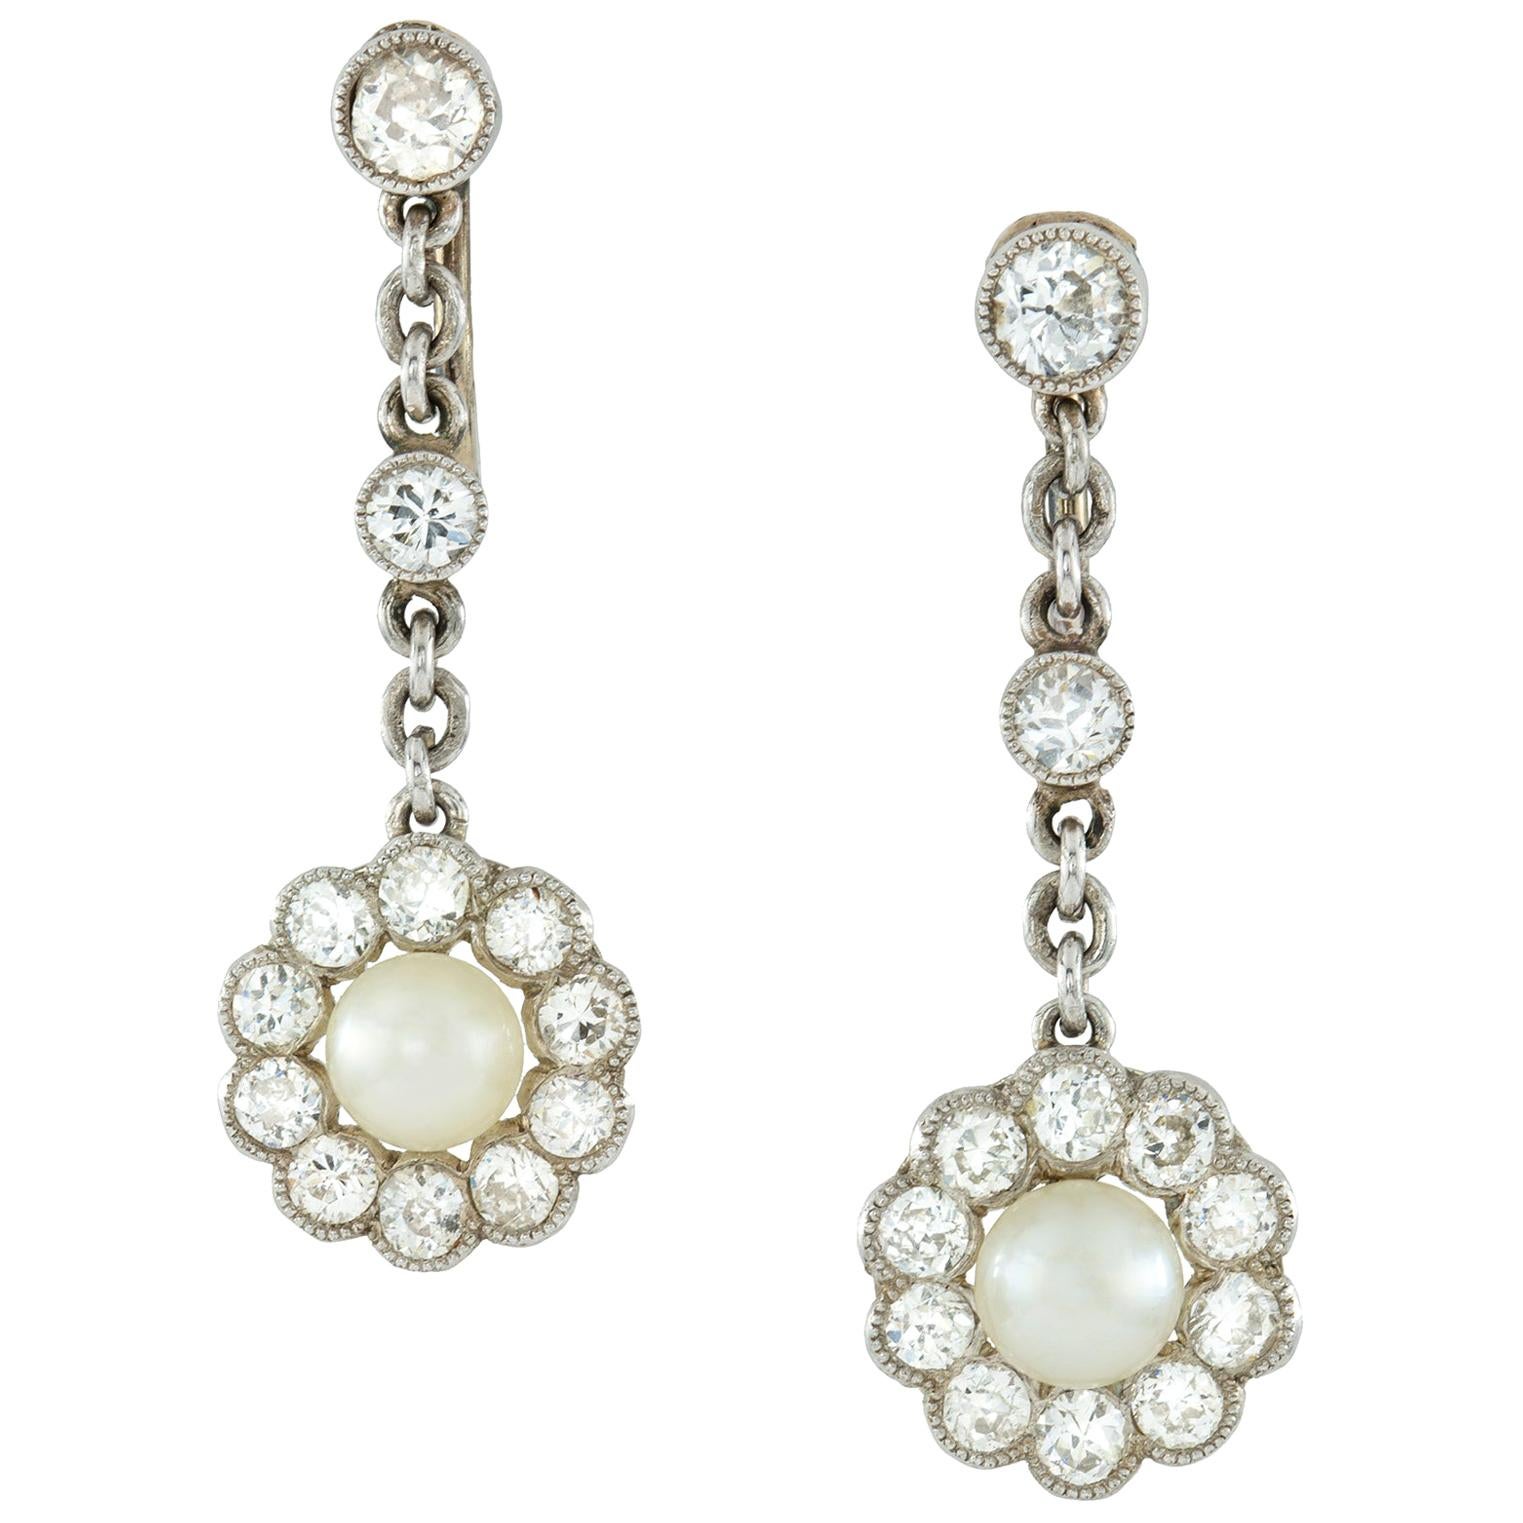 Edwardian Pair of Pearl and Diamond Earrings